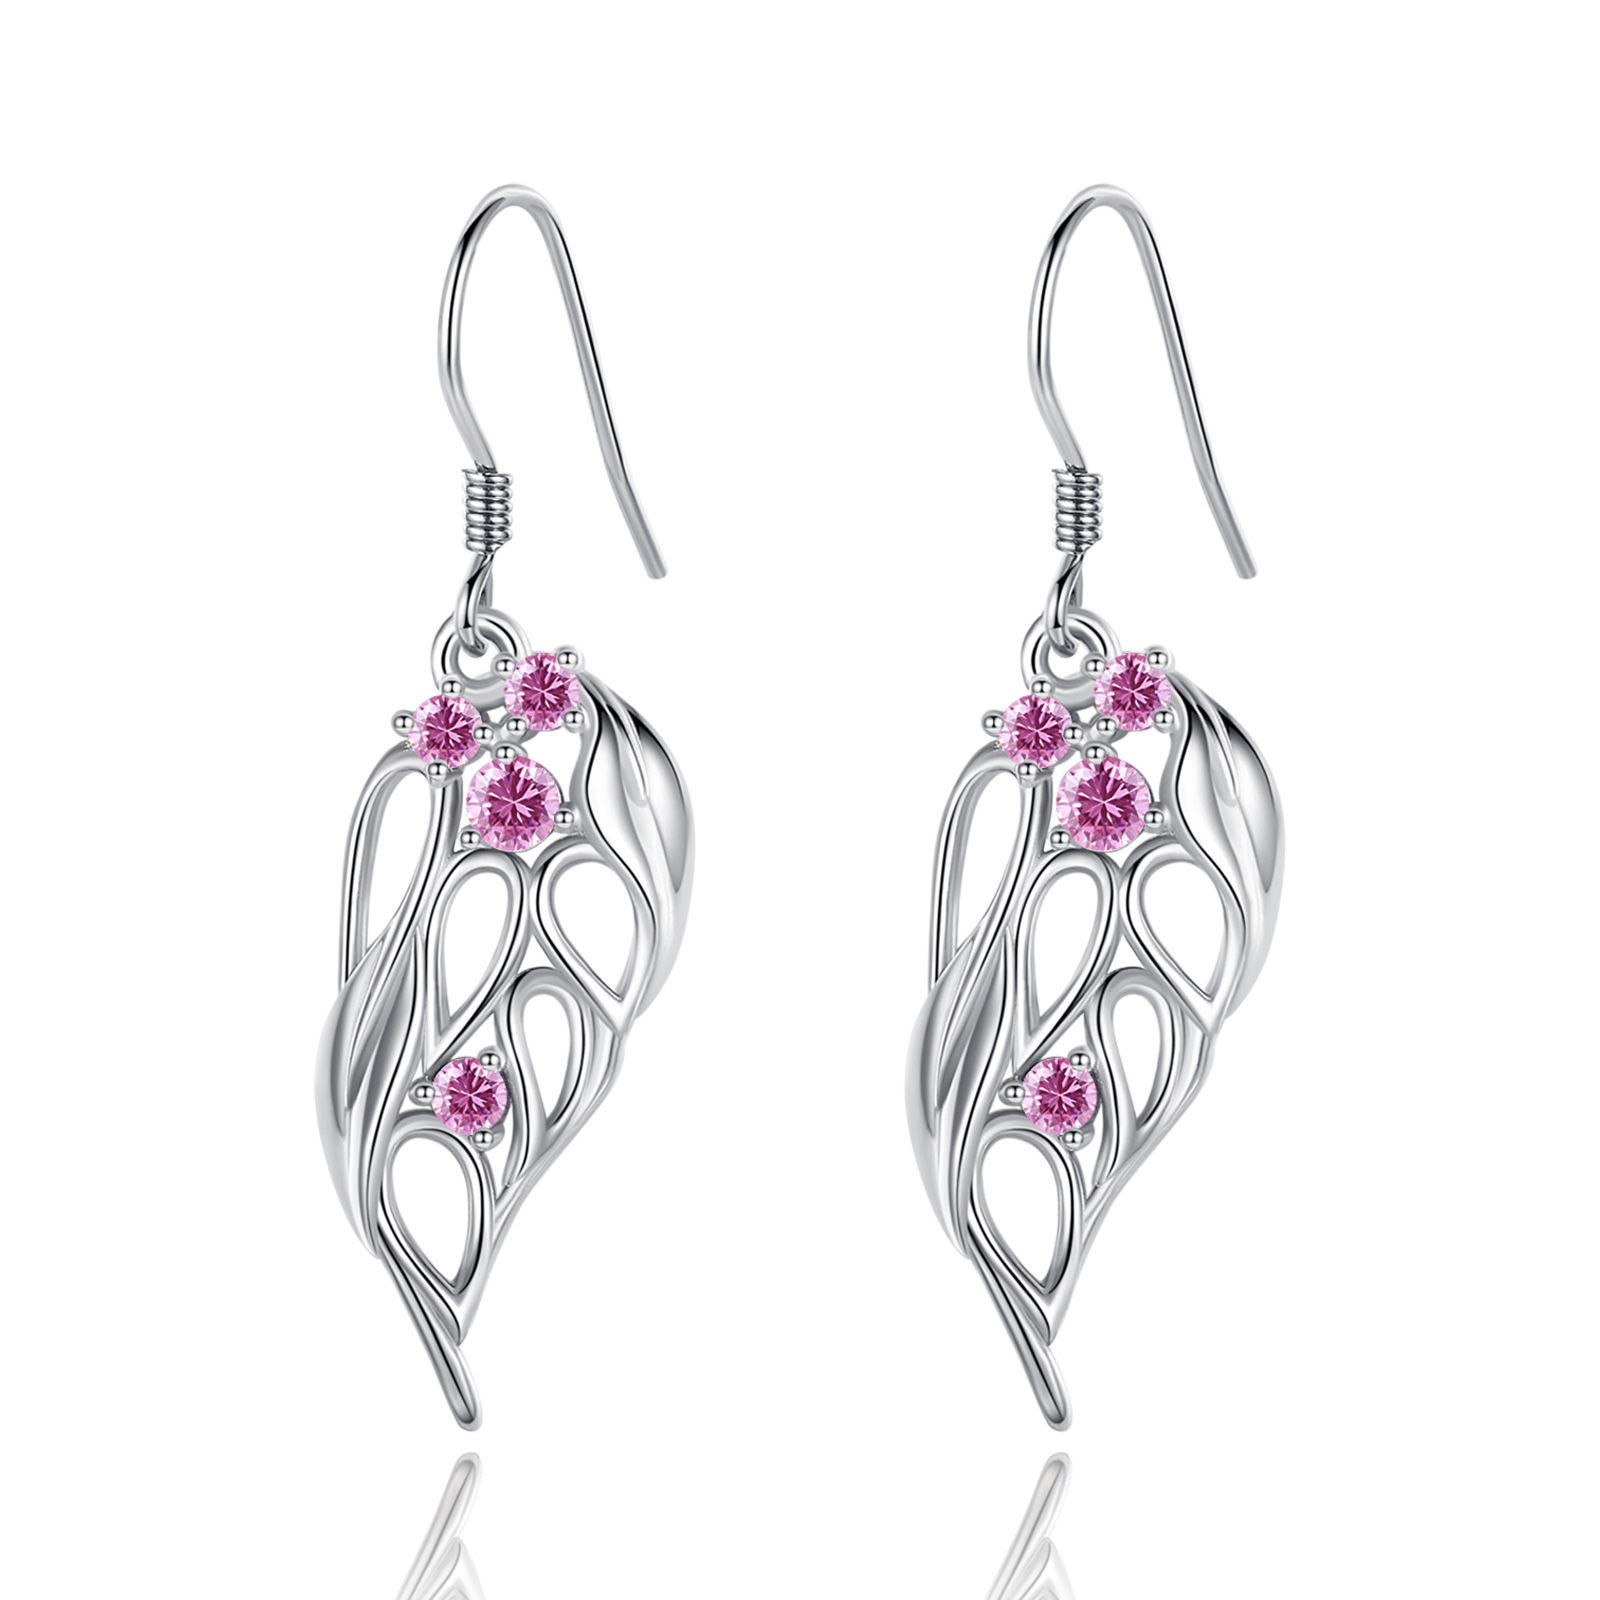 Merryshine Jewelry High Quality 925 Sterling Silver Autumn Leaf Ear Hook Earrings